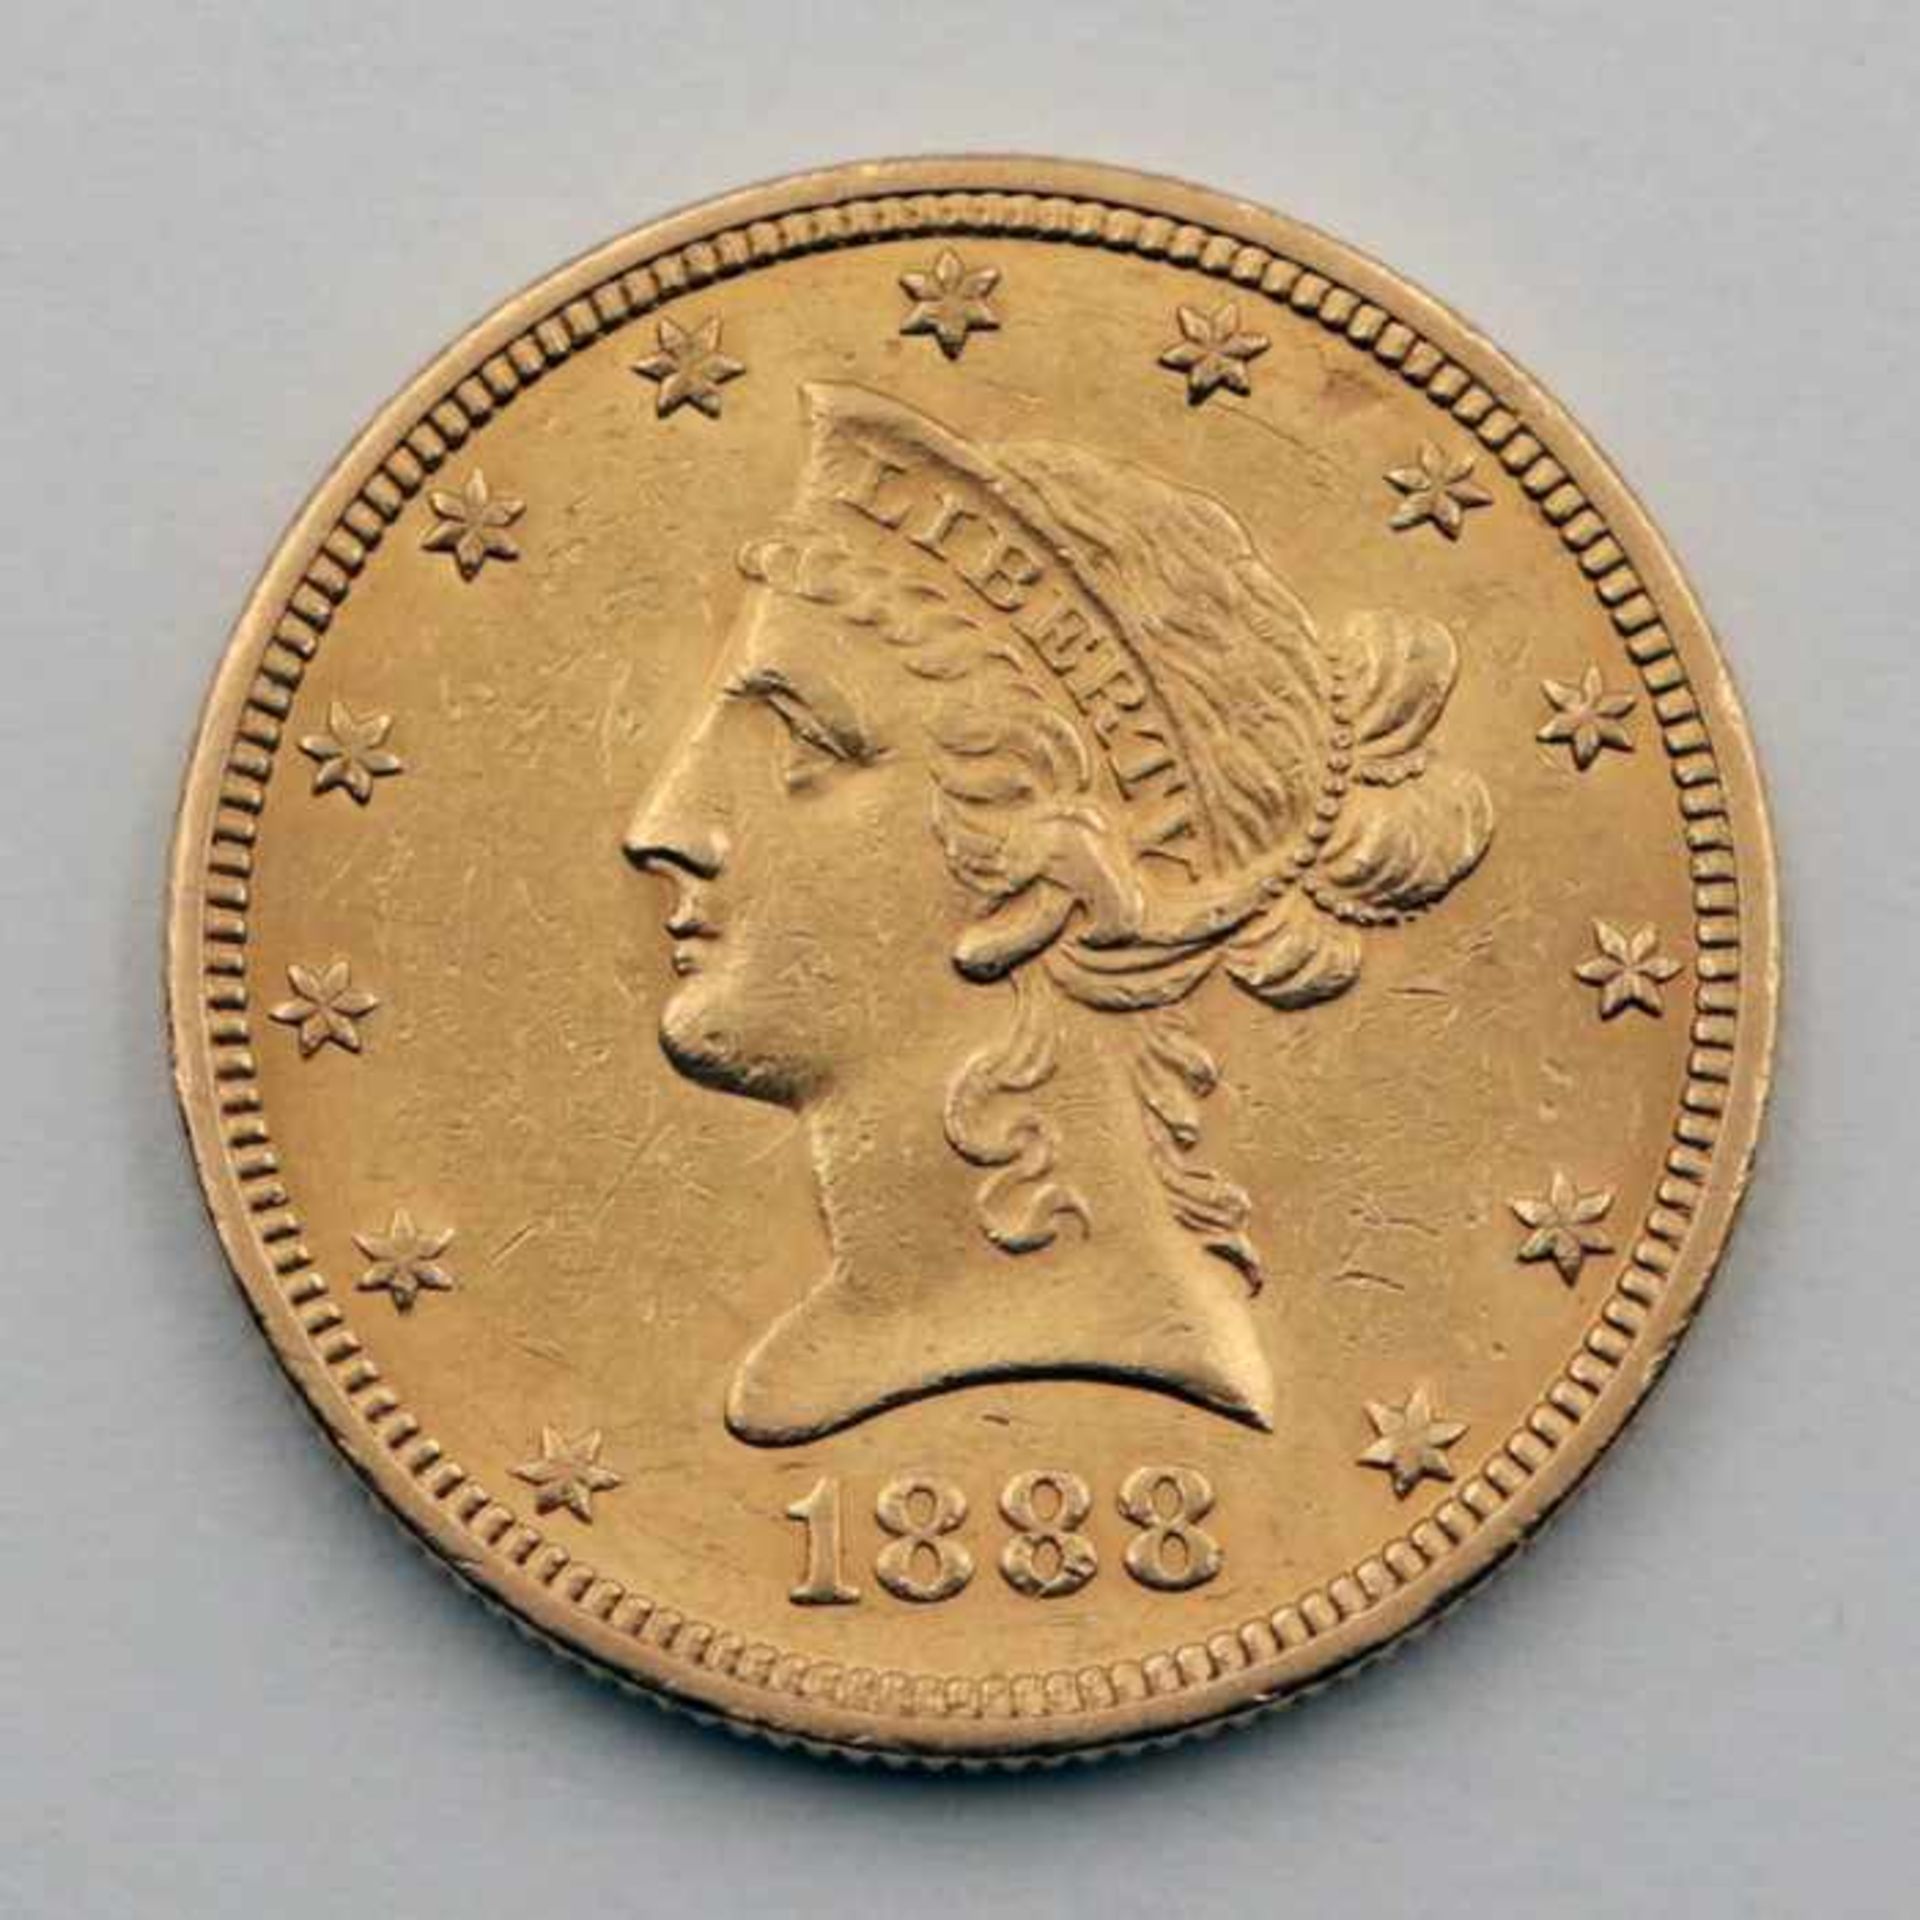 Goldmünze - 10 DollarUSA 1888, 900er Gold, G ca. 16,7 g, 1/2 Unze Feingold, Coroned Head / Eagle, - Image 2 of 2